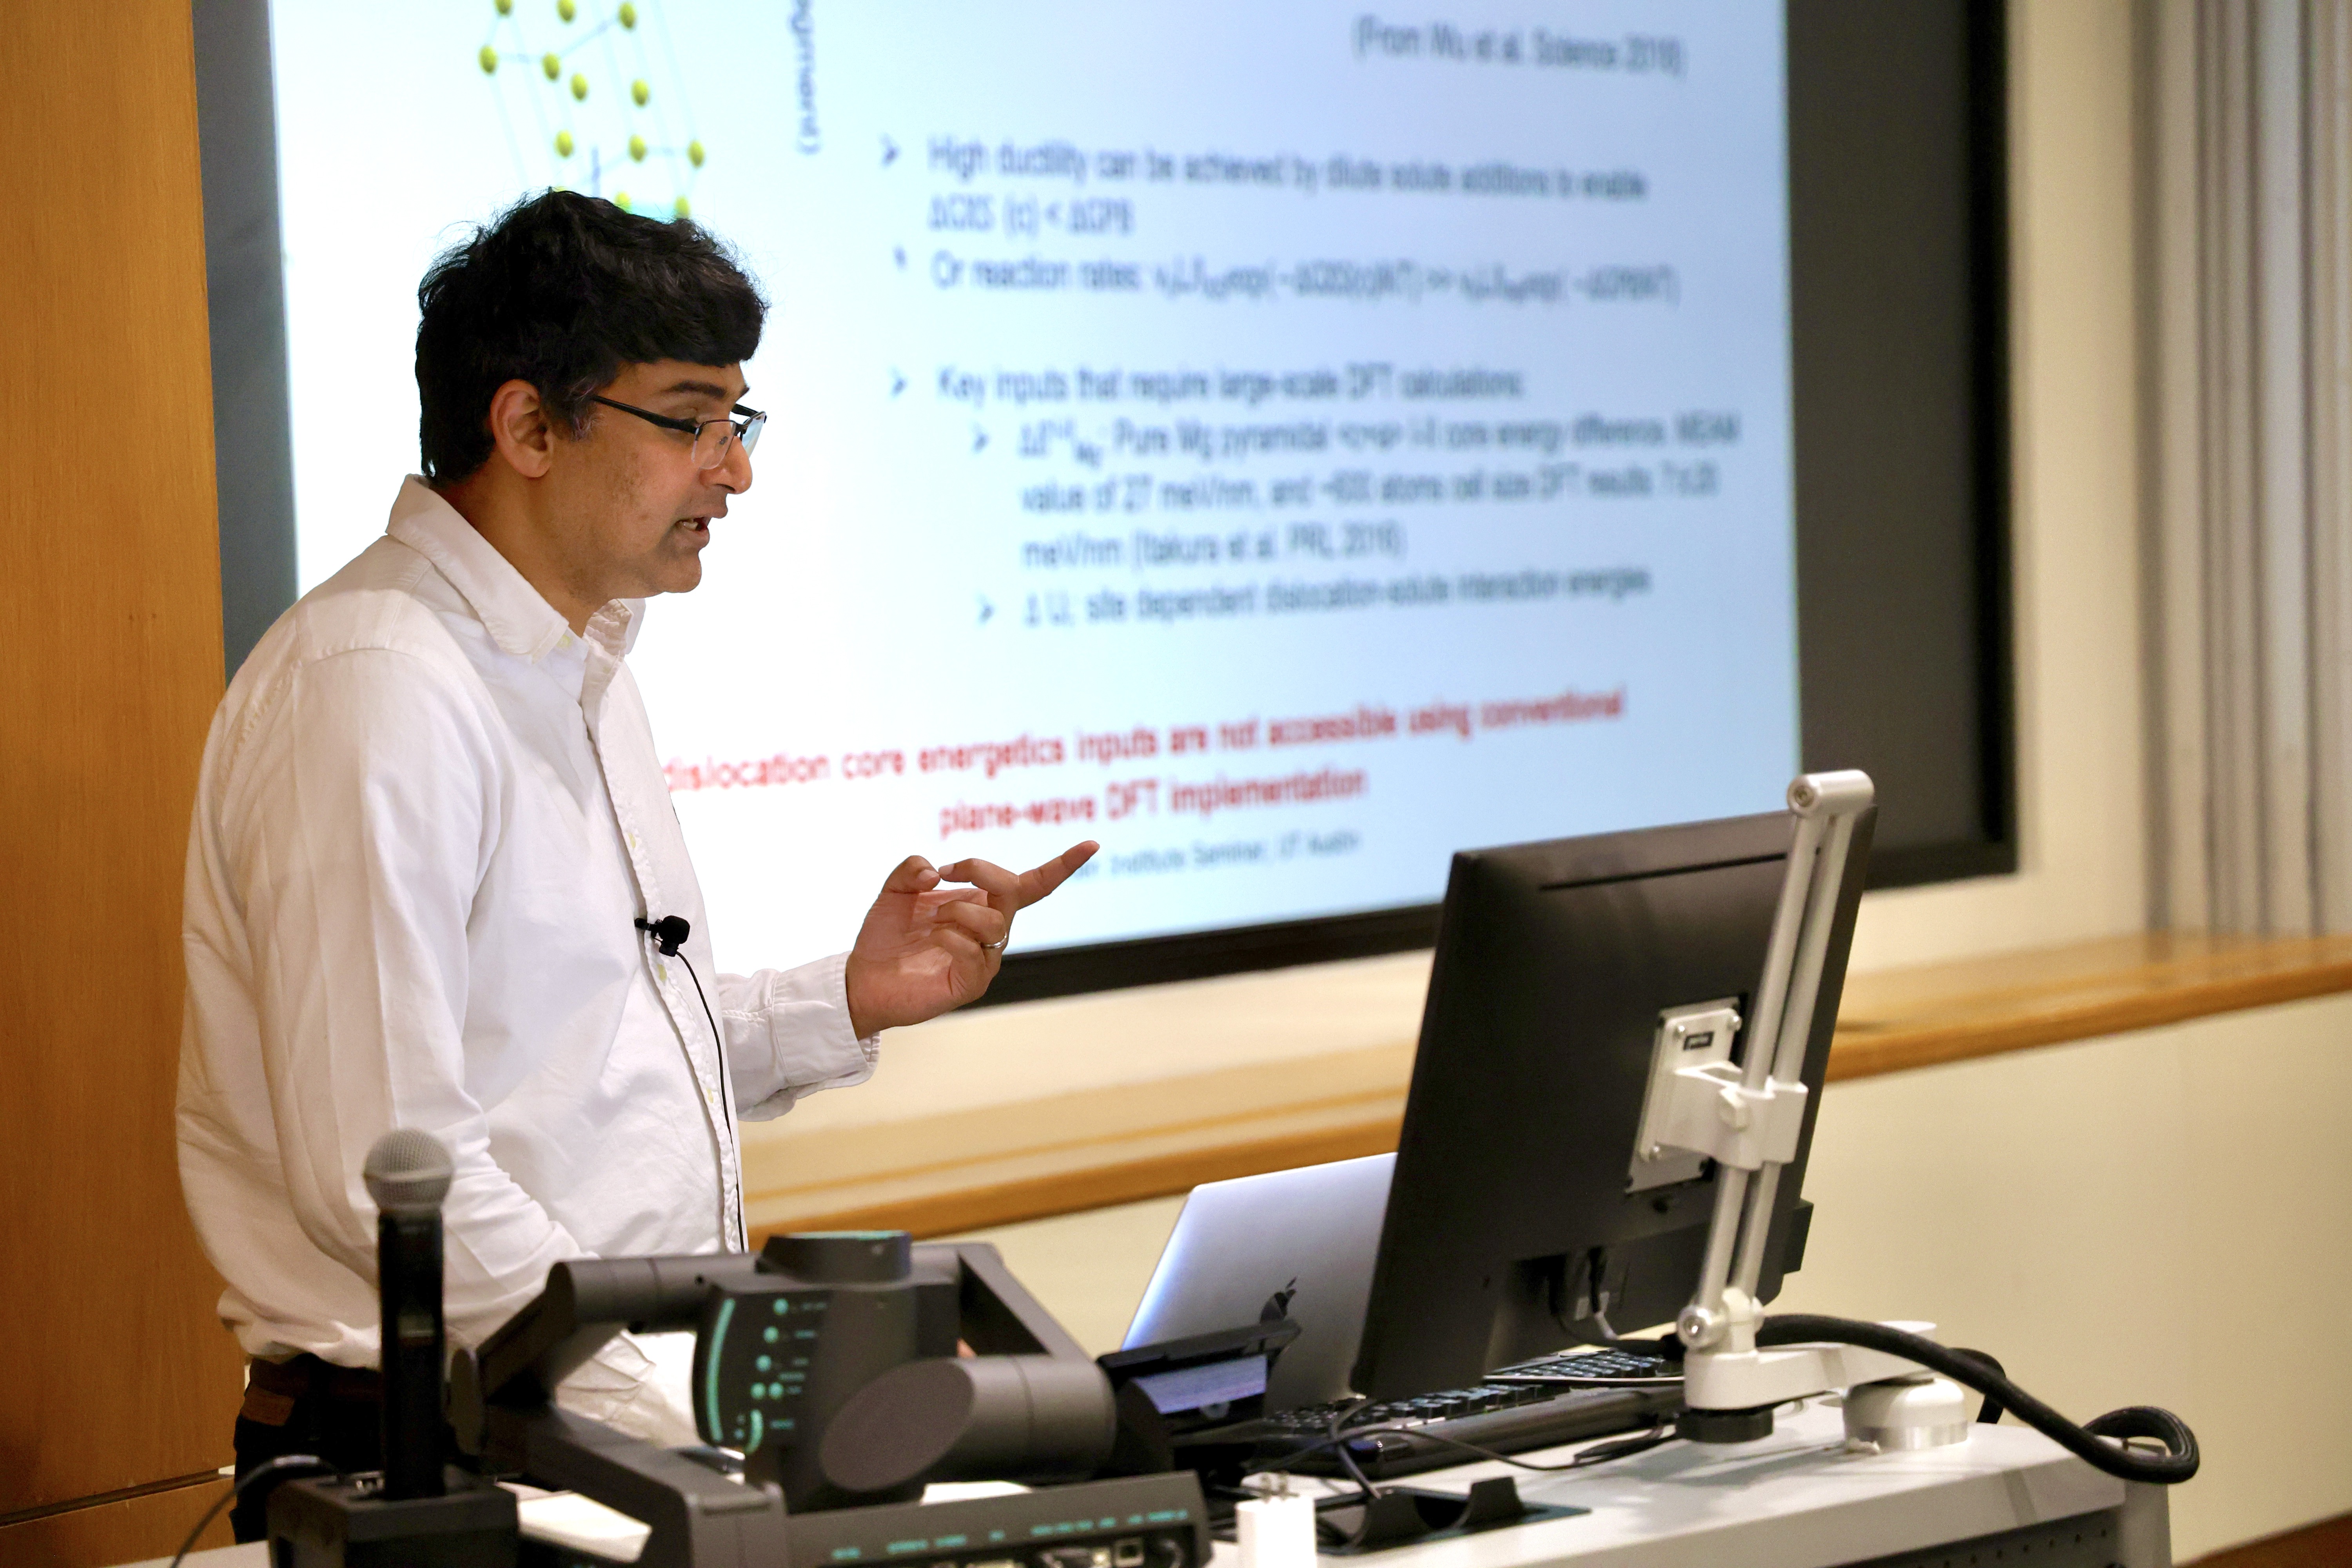 Vikram Gavini presenting his research in the Avaya Auditorium. Credit: Joanne Foote